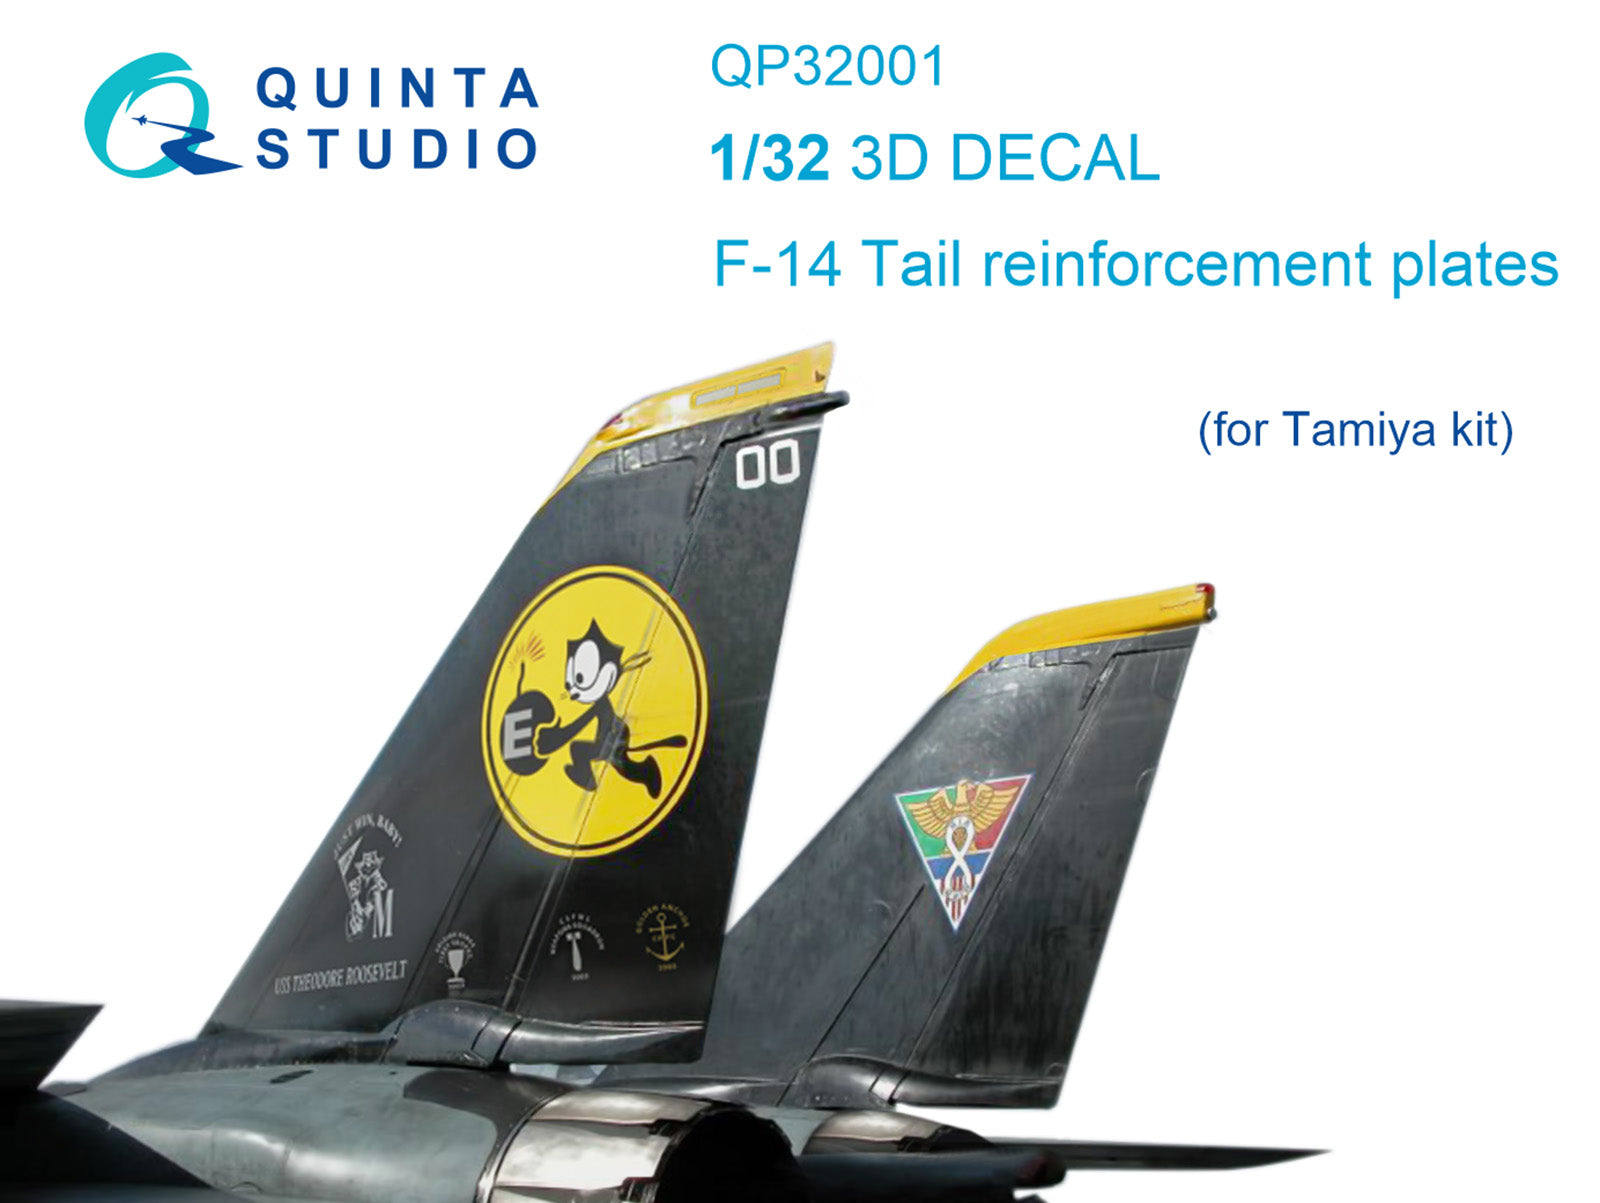 Quinta Studio - 1/32 F-14 tail reinforcement plates QP32001 for Tamiya kit